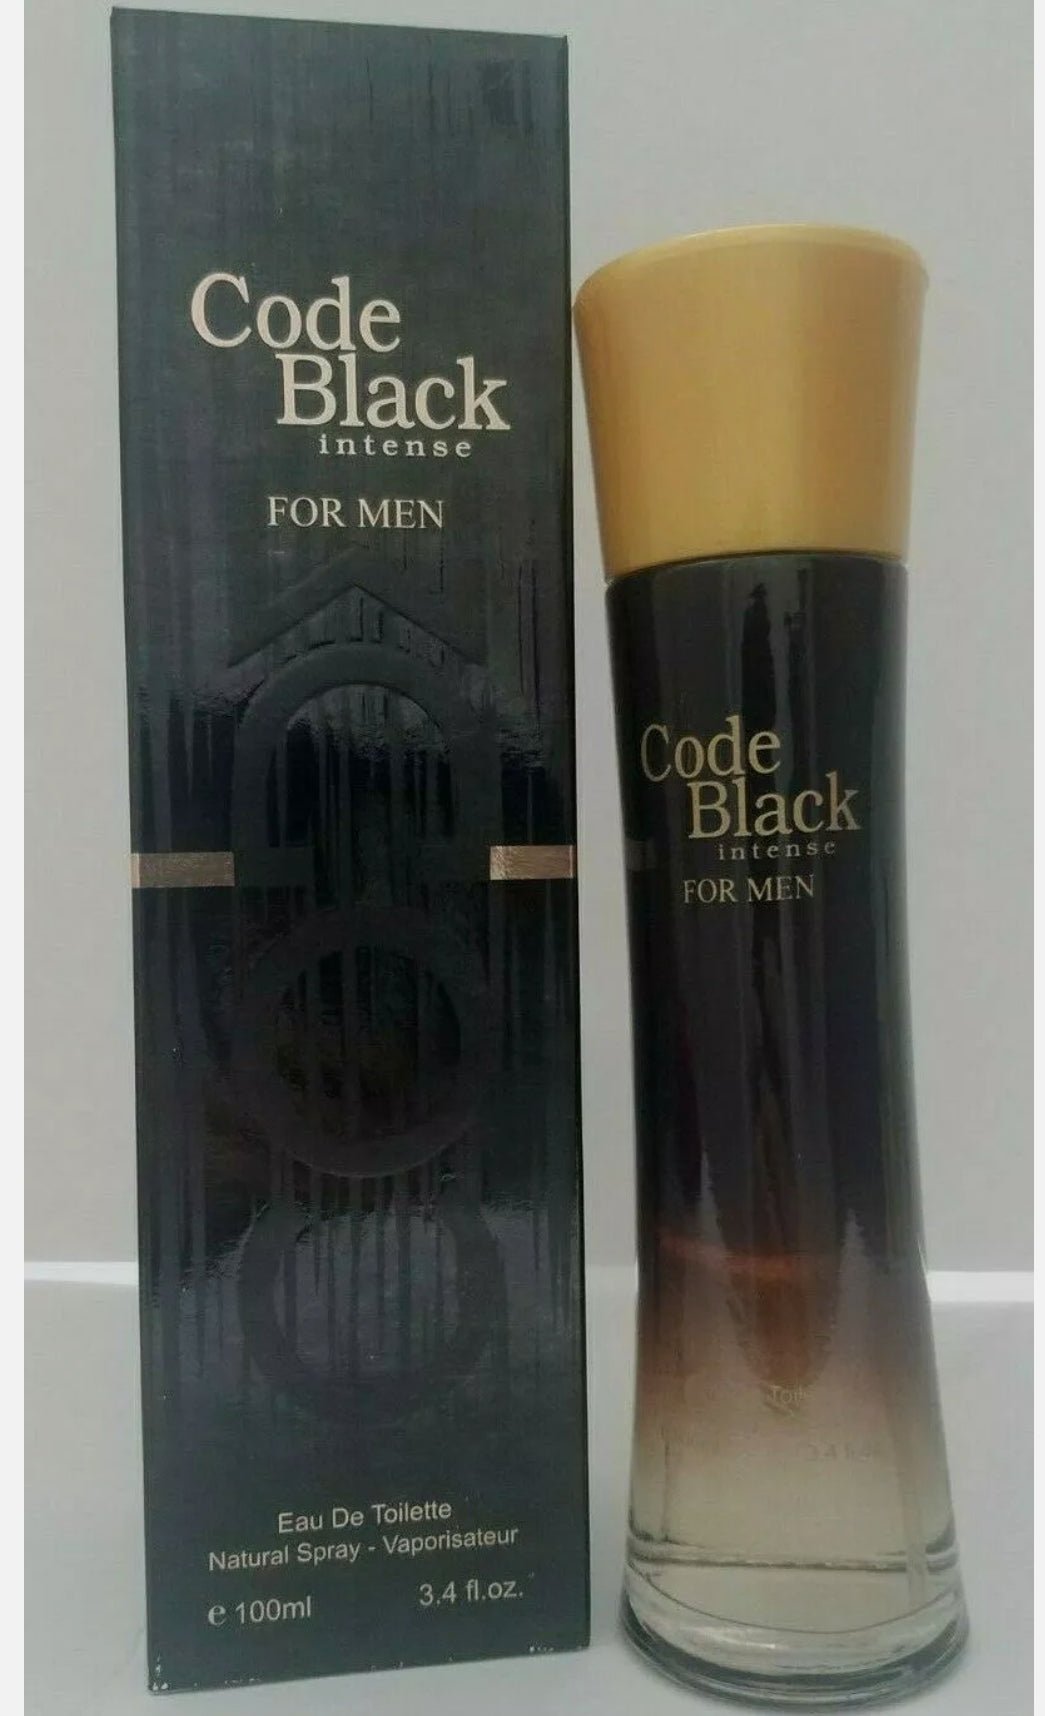 Code Black Intense For Men Perfume 3.4 oz. - BELLEZA'S - Code Black Intense For Men Perfume 3.4 oz. - BELLEZA'S - 8409